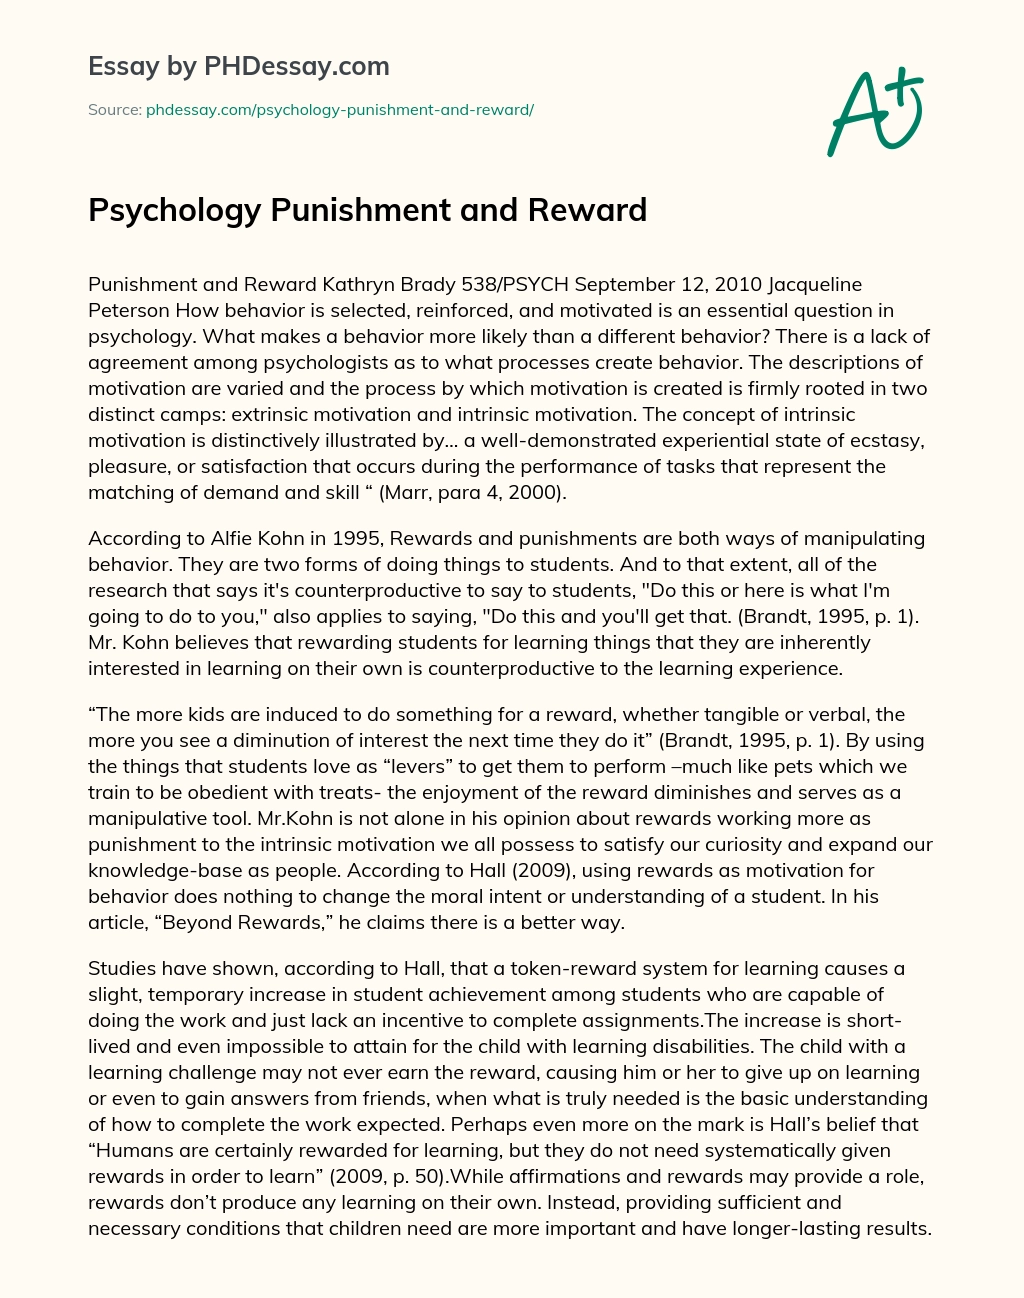 Psychology Punishment and Reward essay